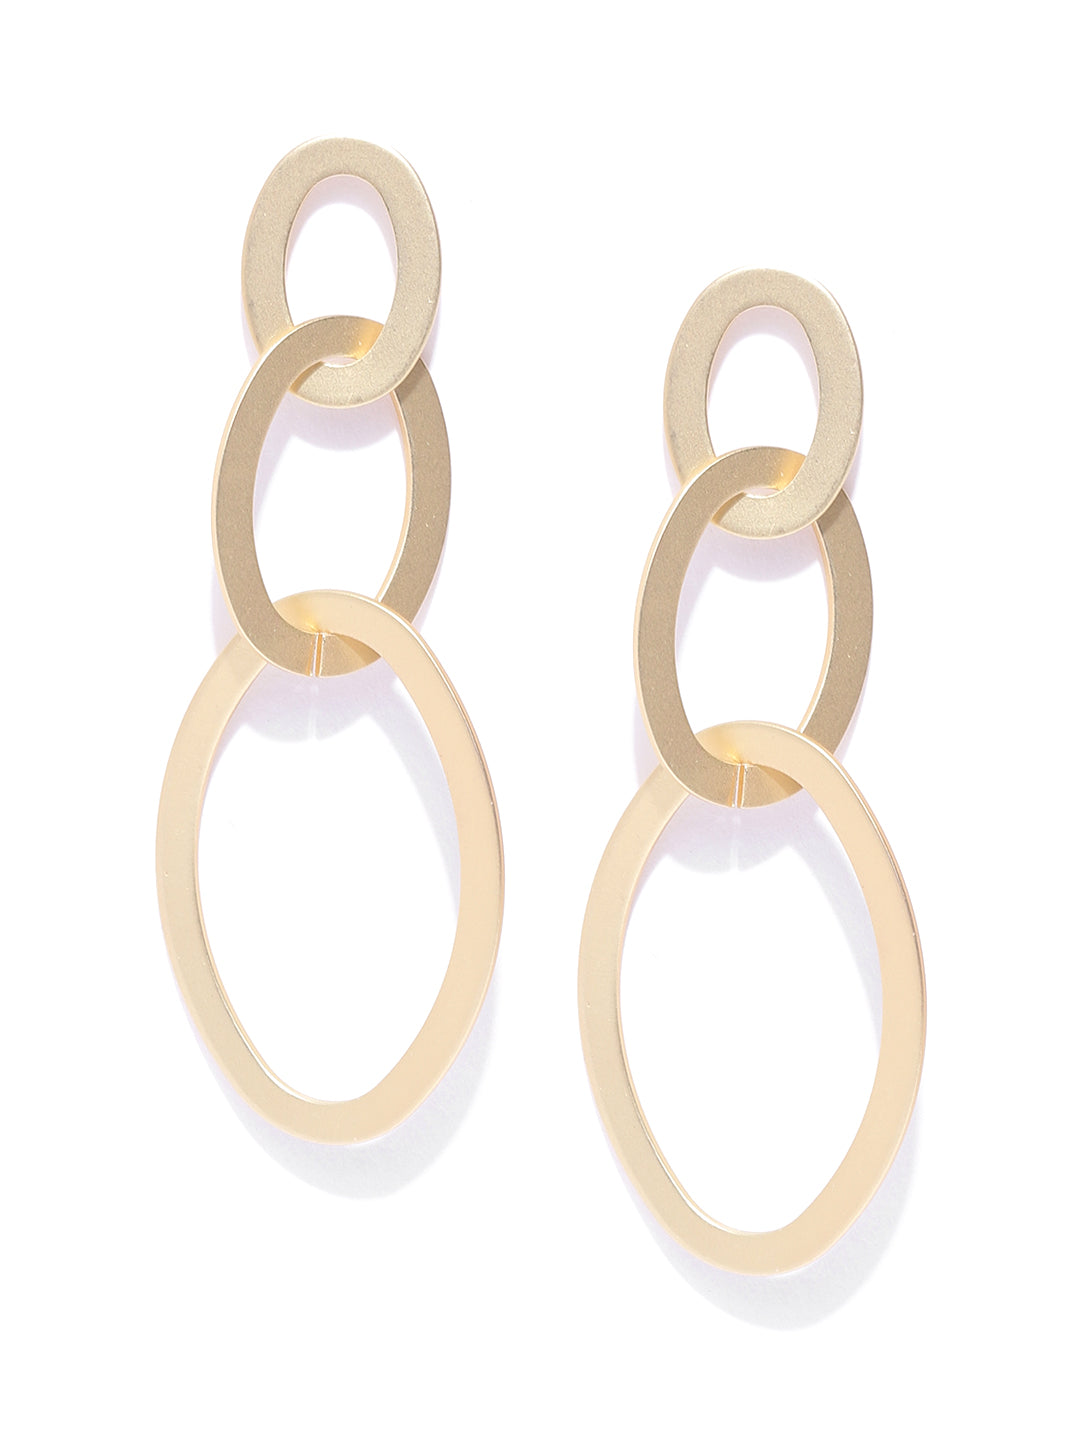 Golden Party Wear Loop Earrings For Girls And Women